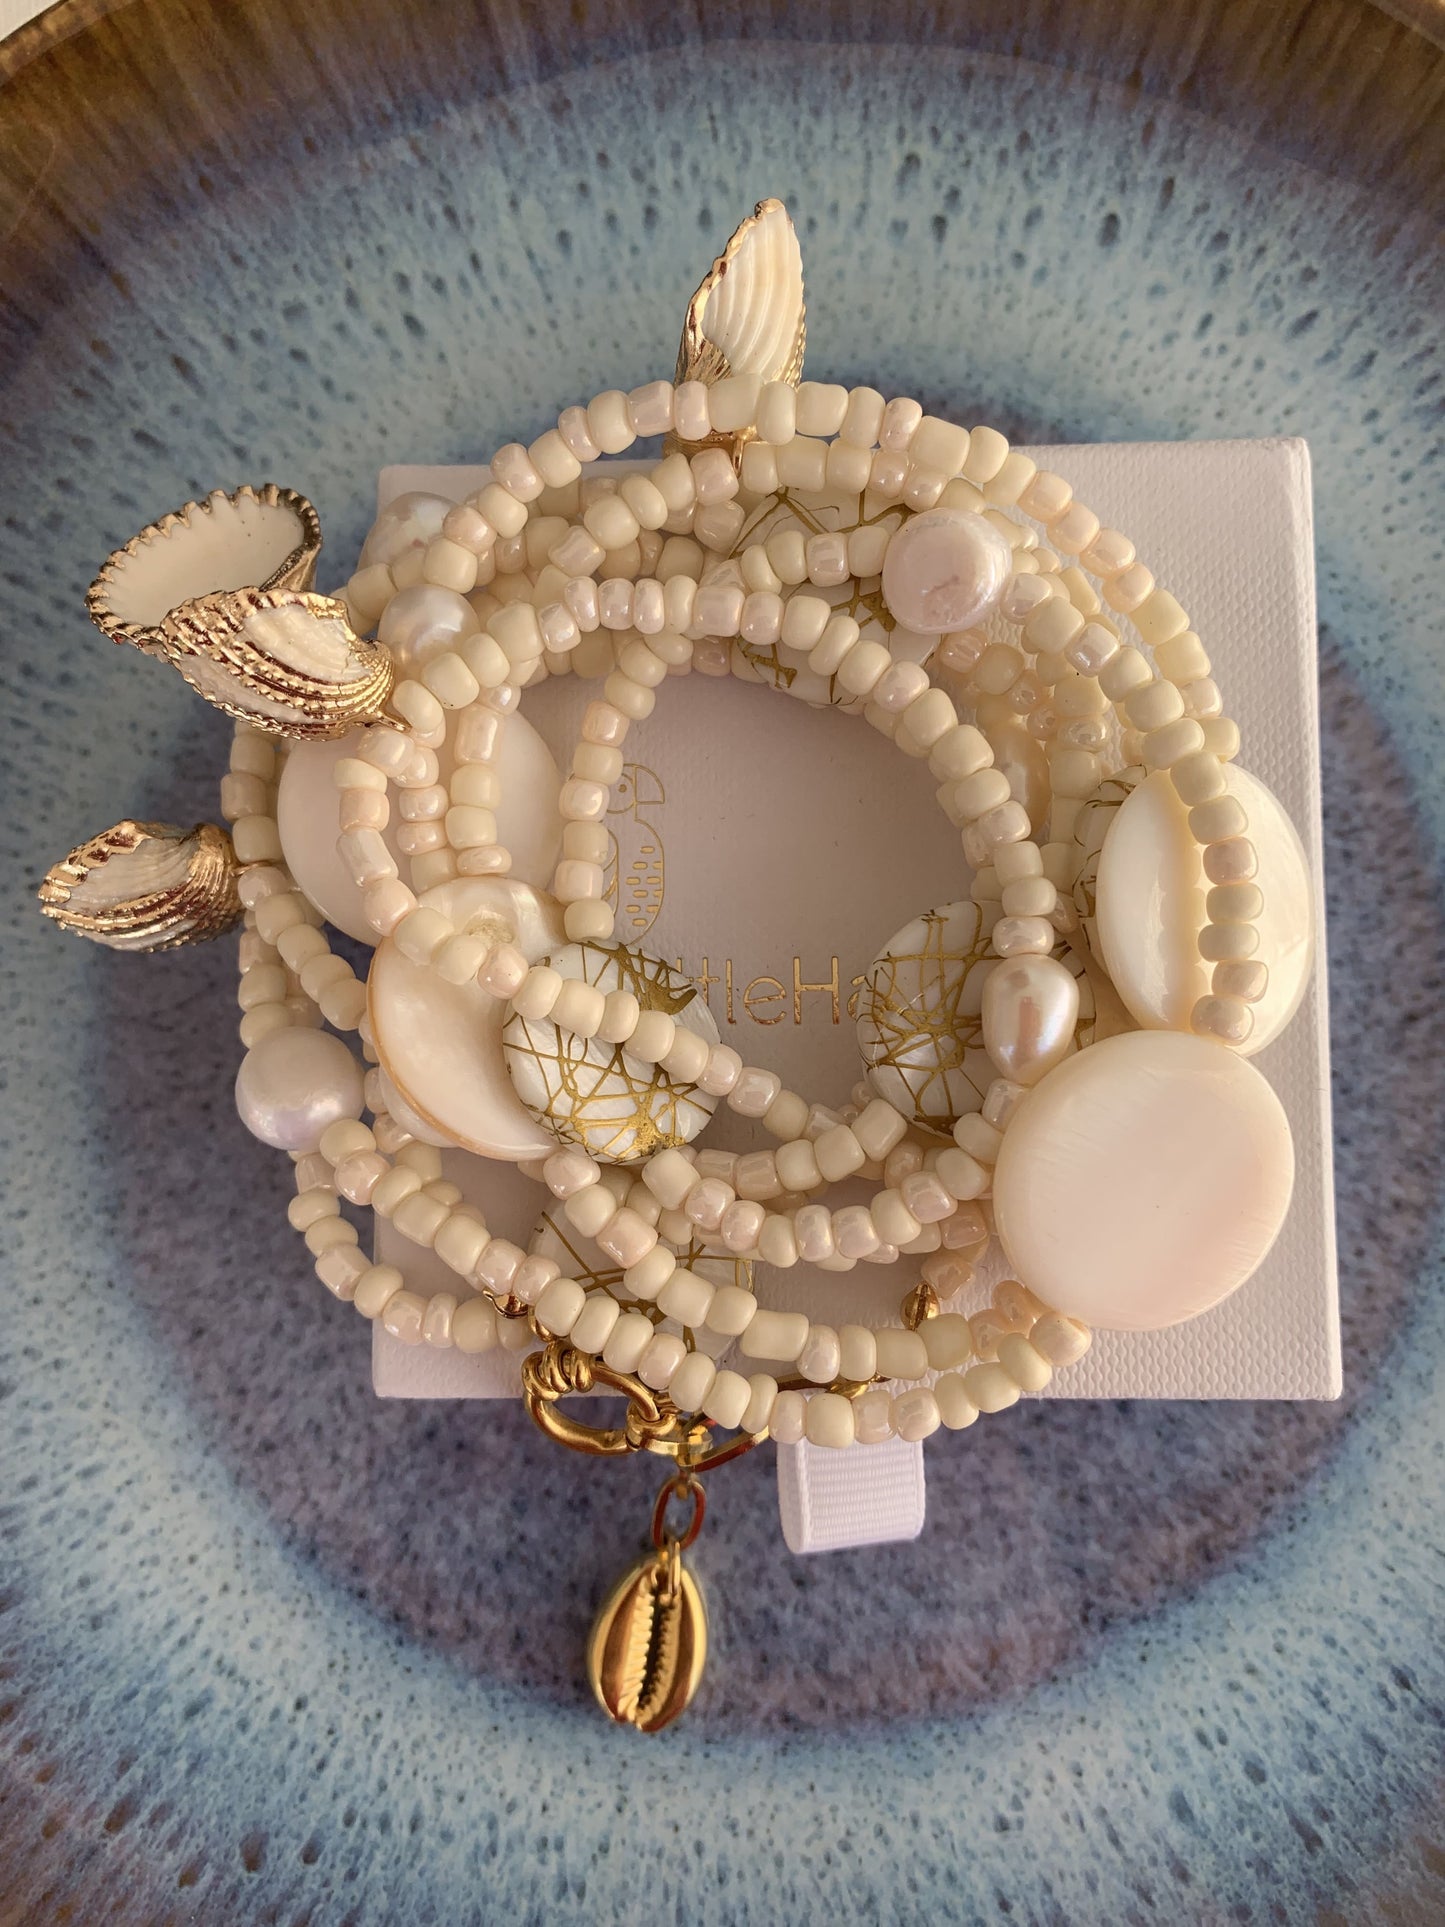 Mermaid wrap bracelet with shells